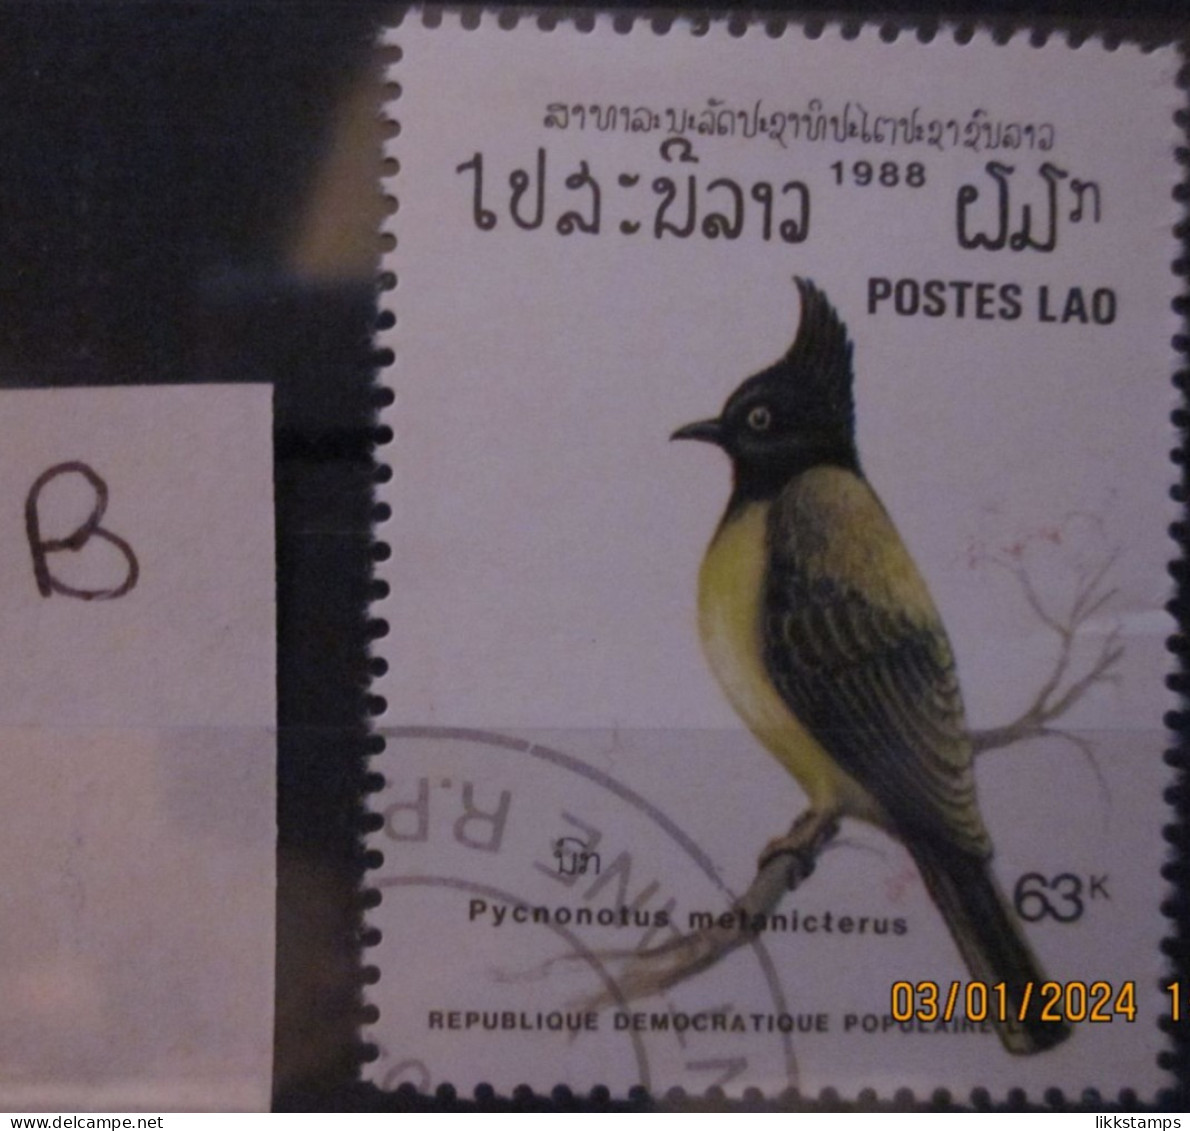 LAOS ~ 1988 ~ S.G. 1097, ~ 'LOT B' ~ BIRDS. ~ VFU #03437 - Laos